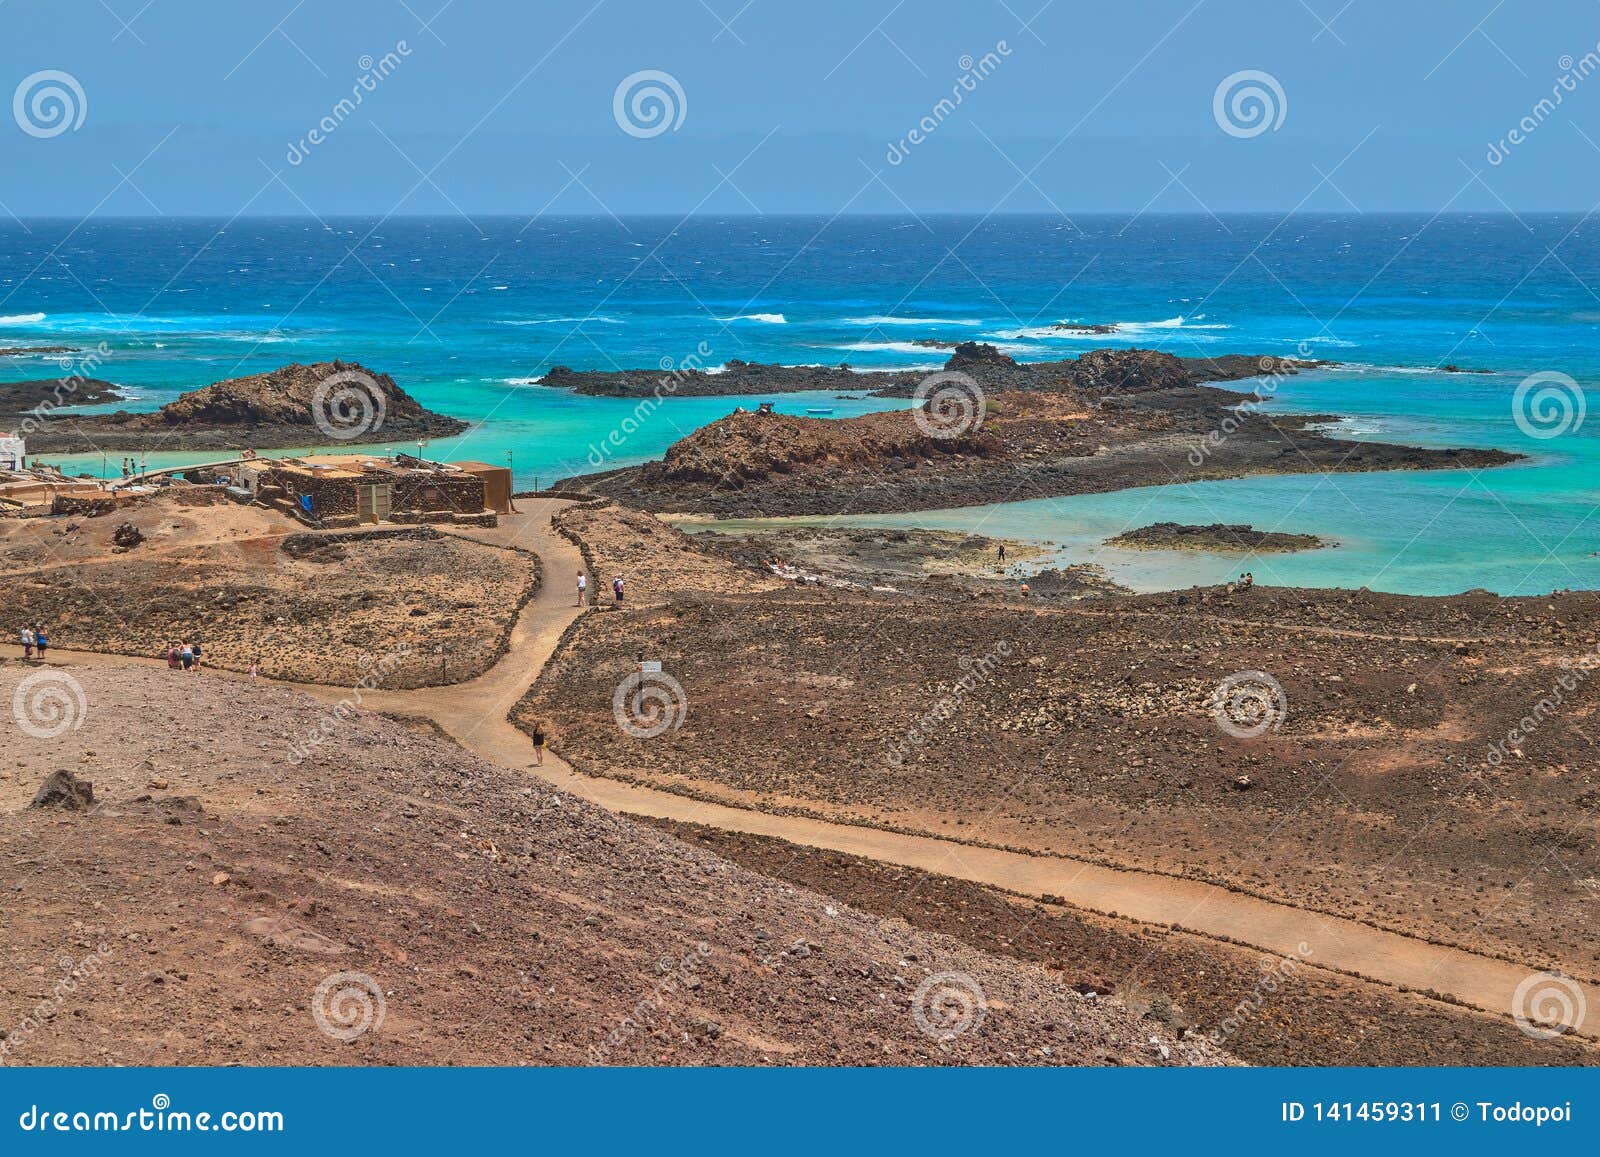 isla de lobos with turquoise sea and waves in fuerteventura